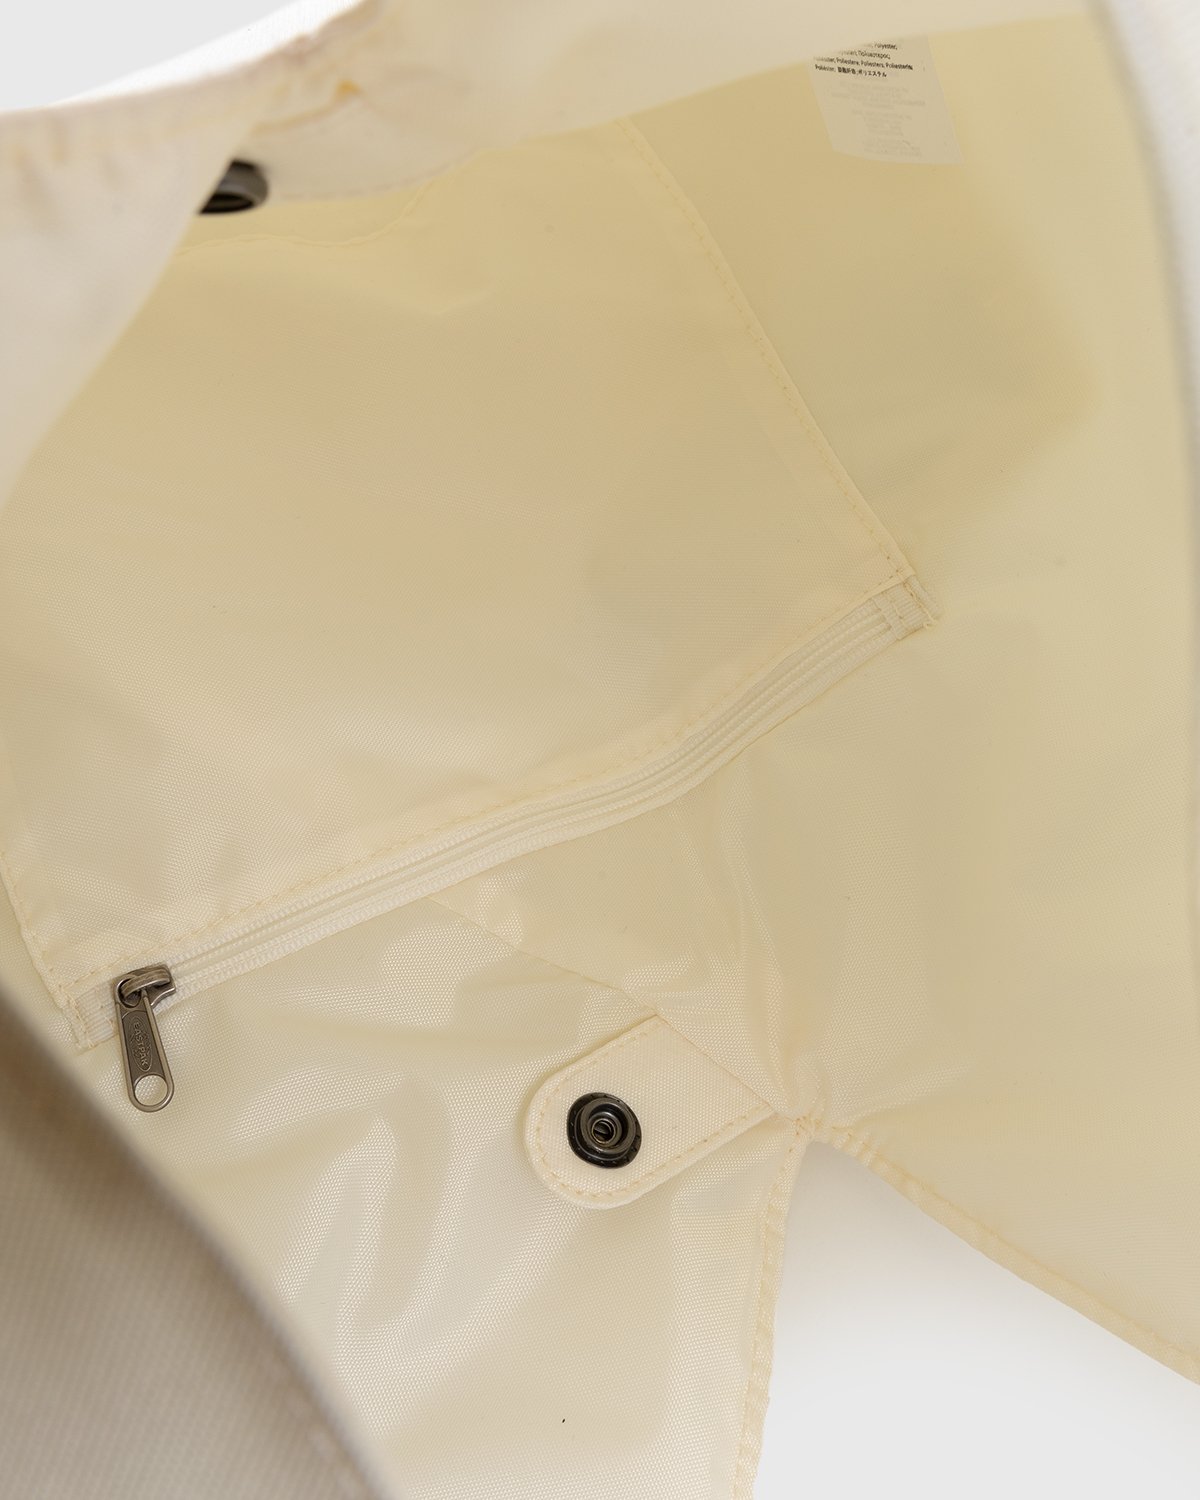 MM6 Maison Margiela x Eastpak - Borsa Shopping Bag White - Accessories - White - Image 4